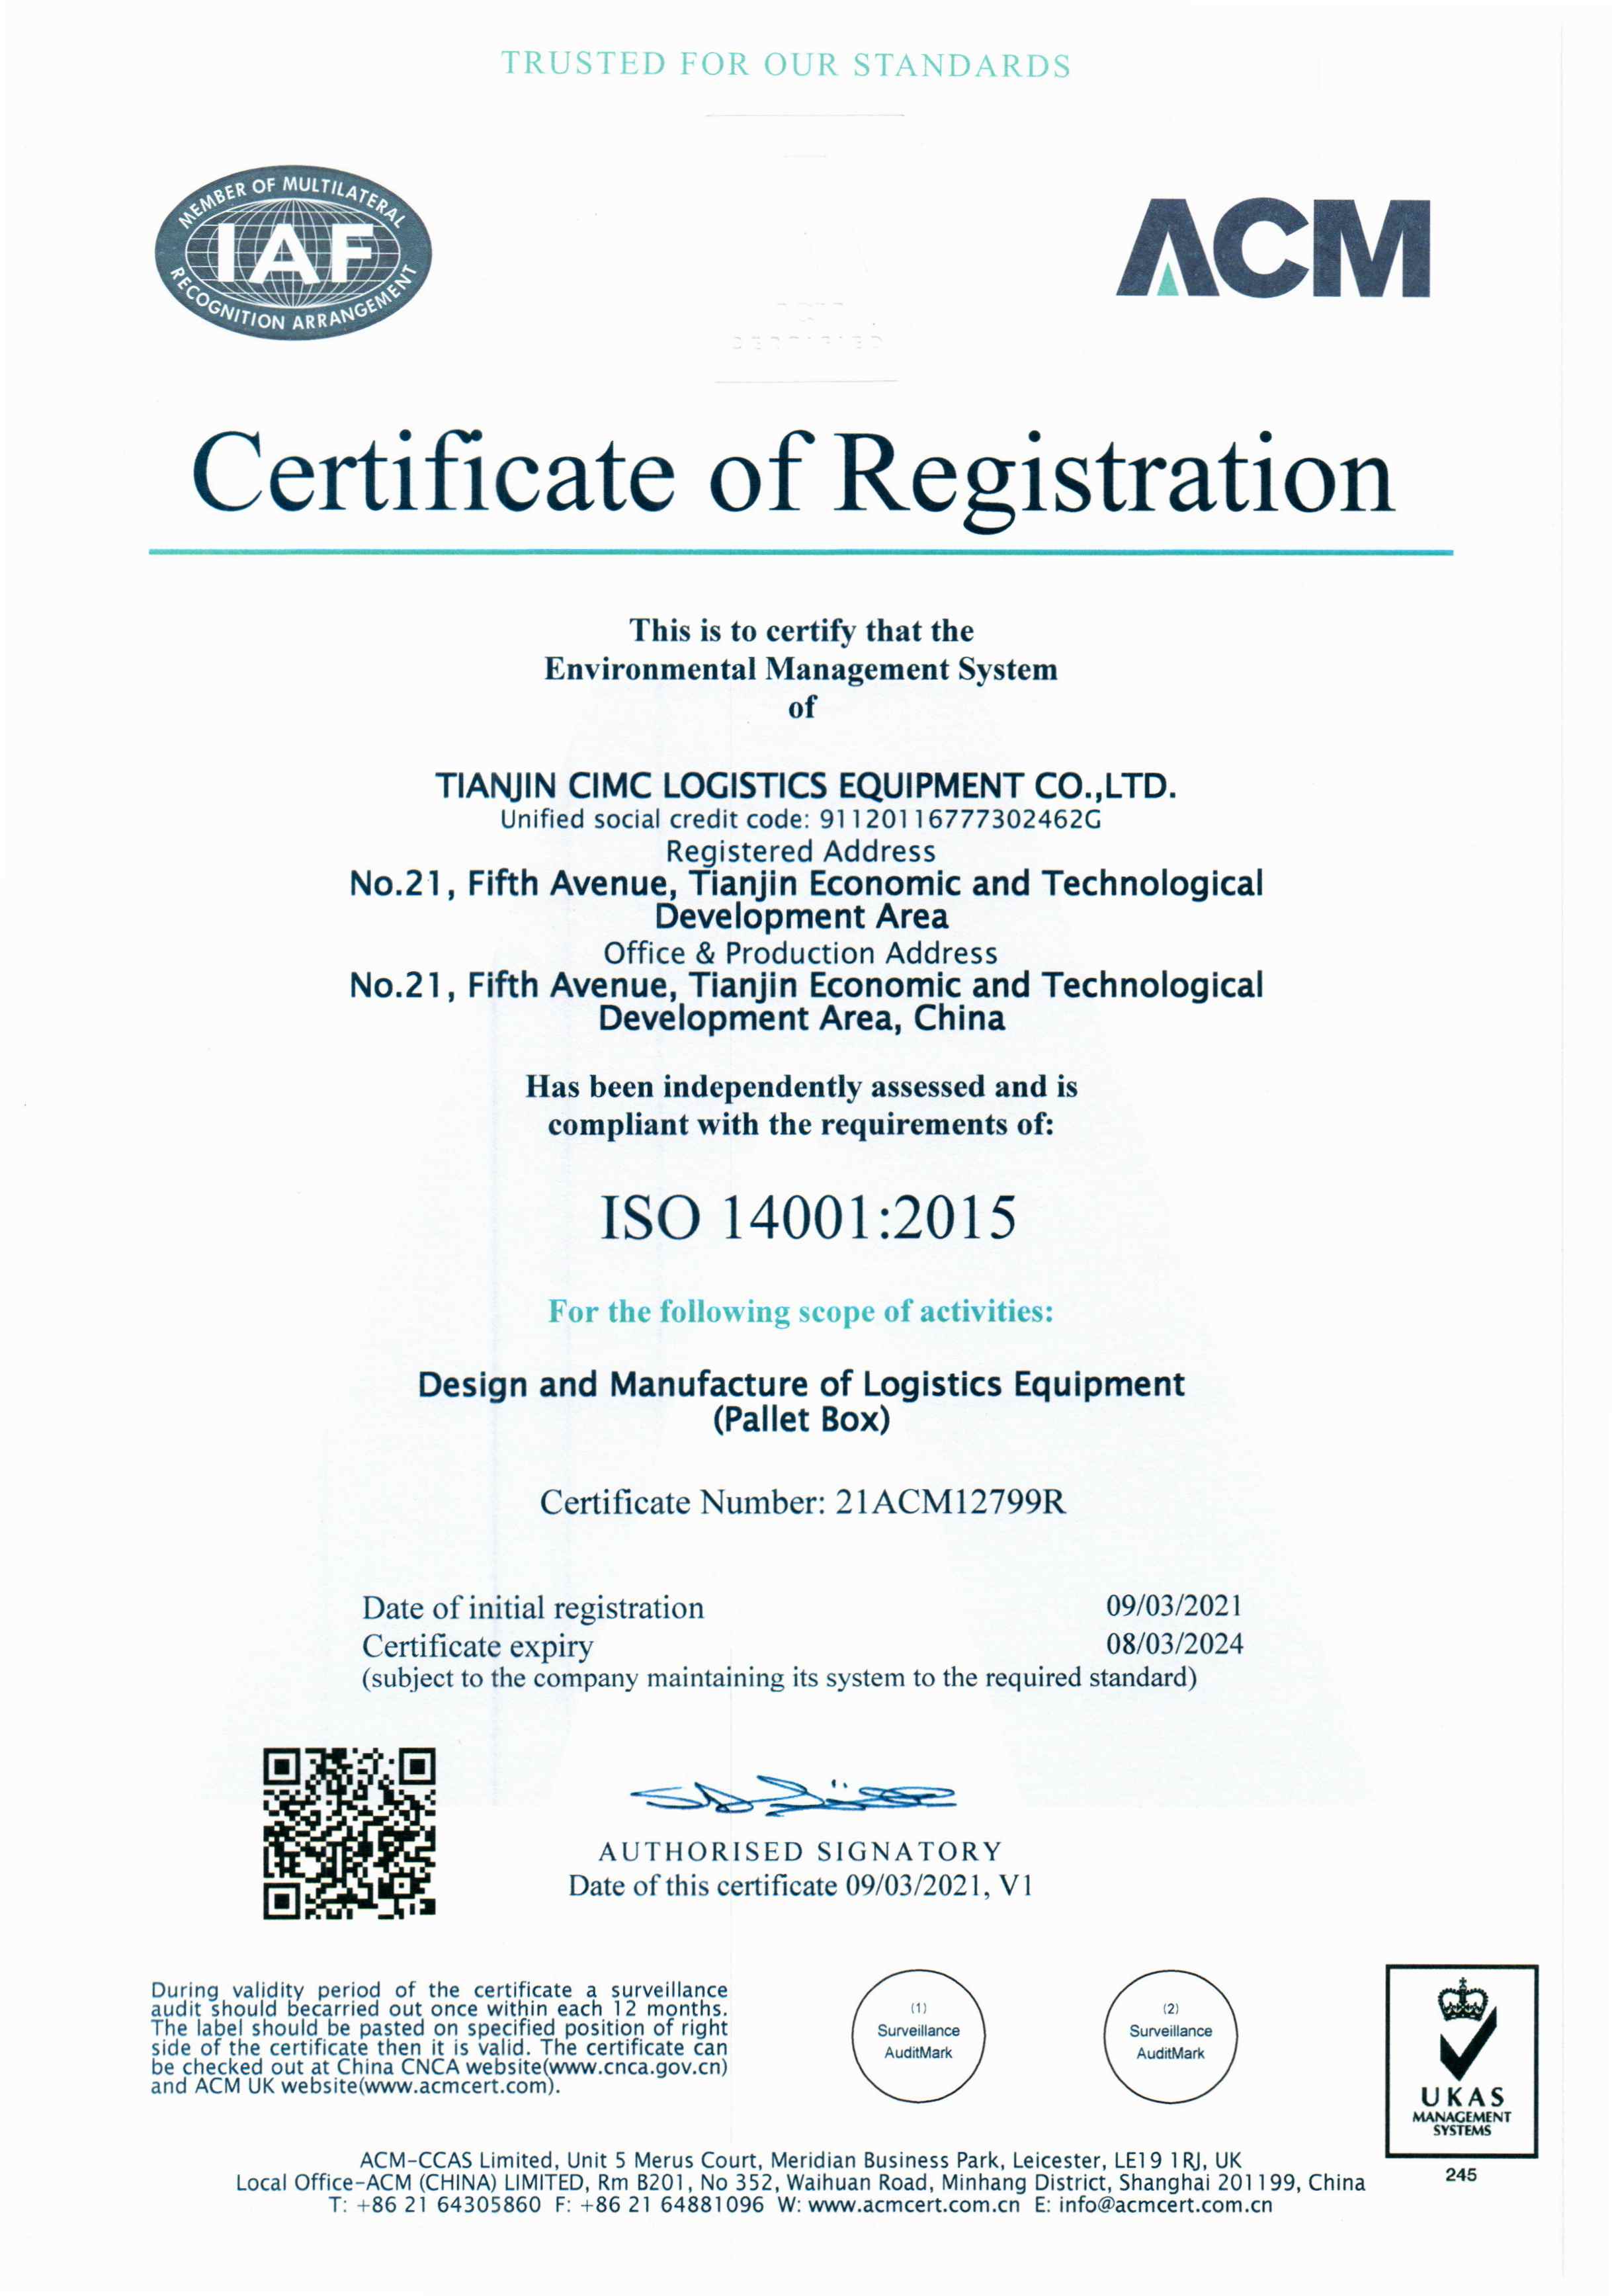 ISO 14001:2015 certificate of registration